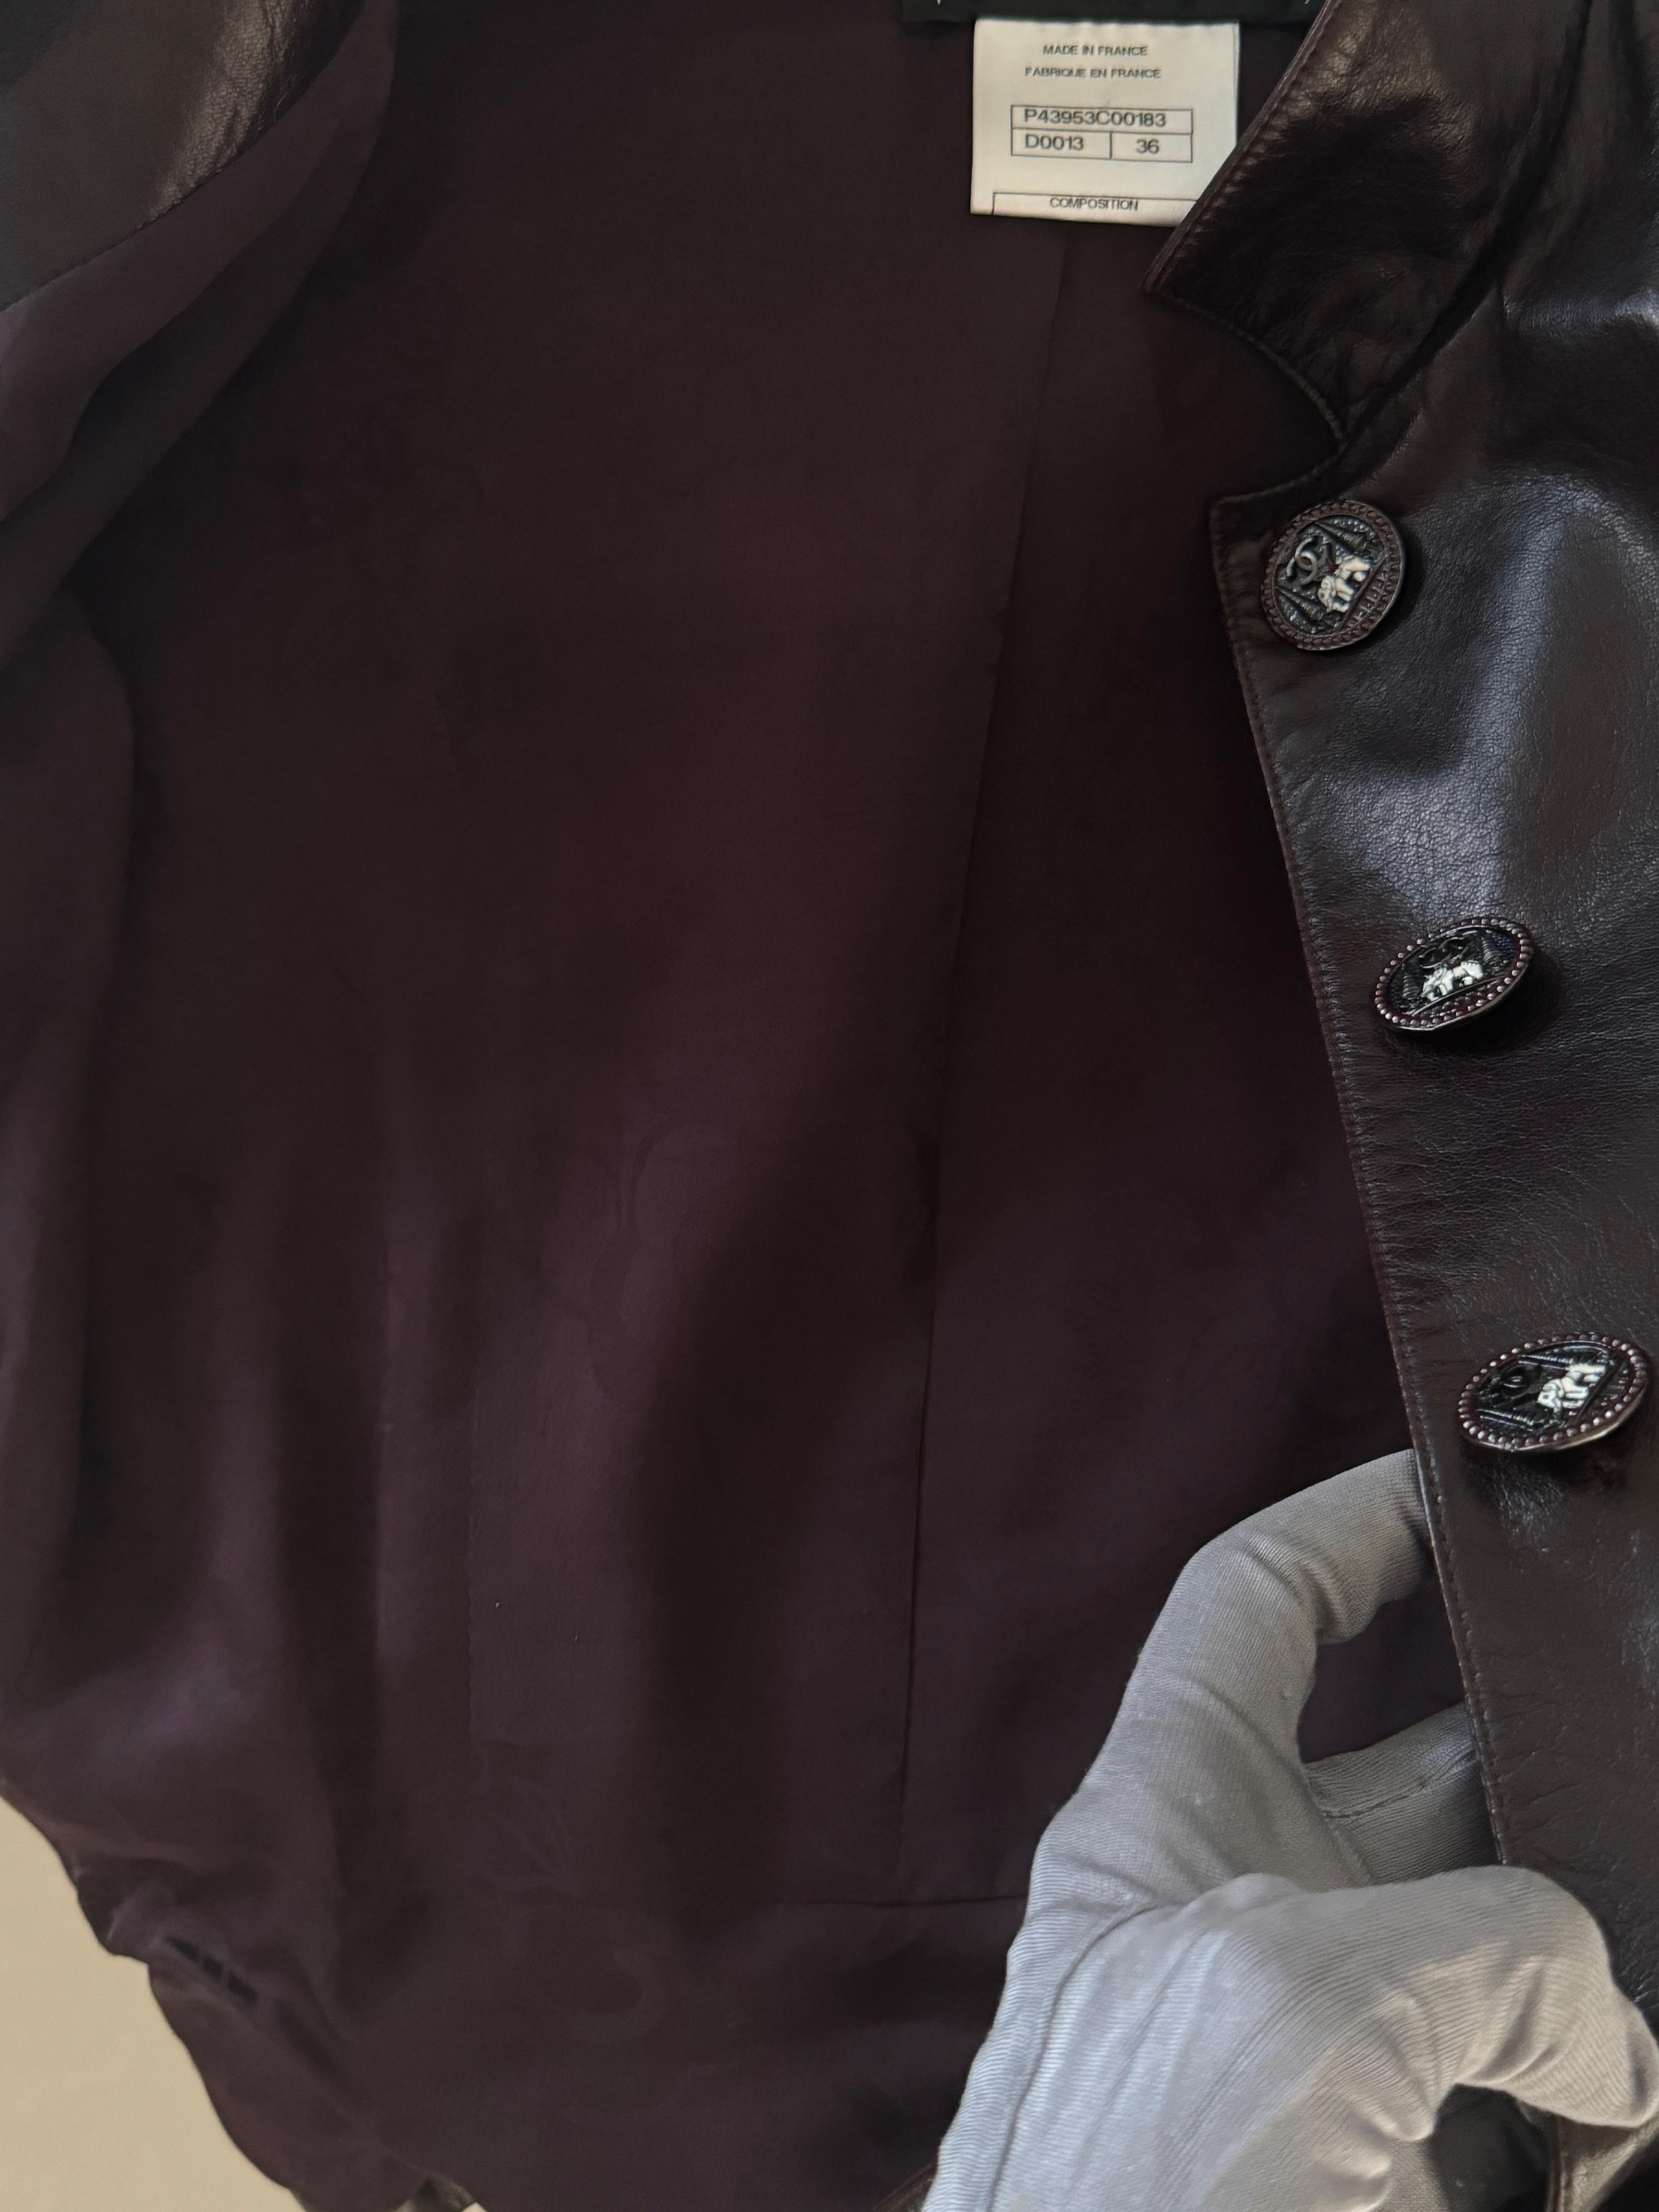 Chanel Rarest Paris / Bombay Runway Leather Jacket For Sale 7